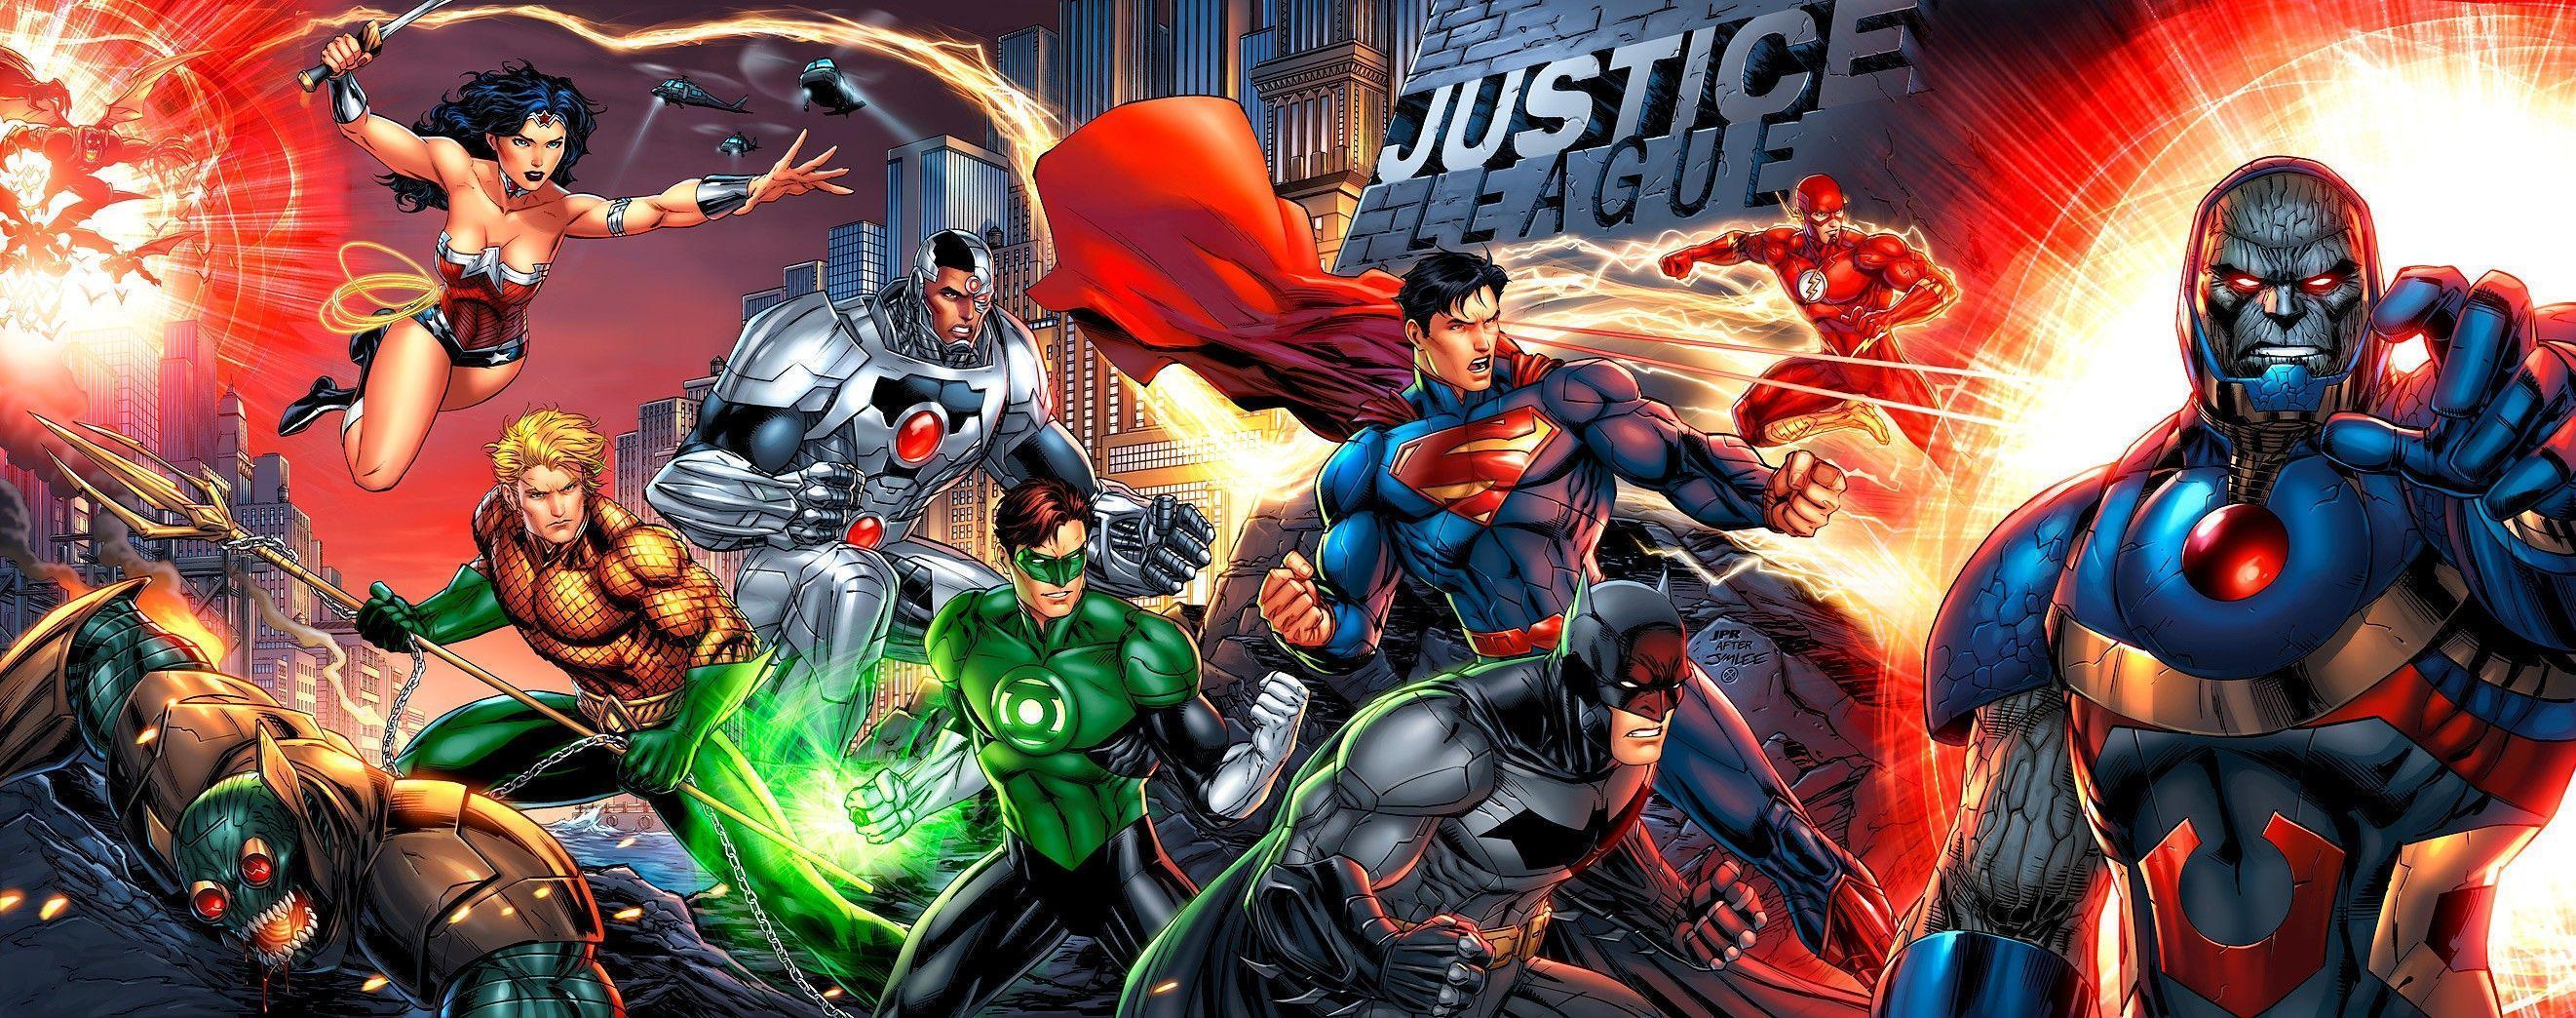 Superman, Composite Superman, Batman, DC Comics, Justice League